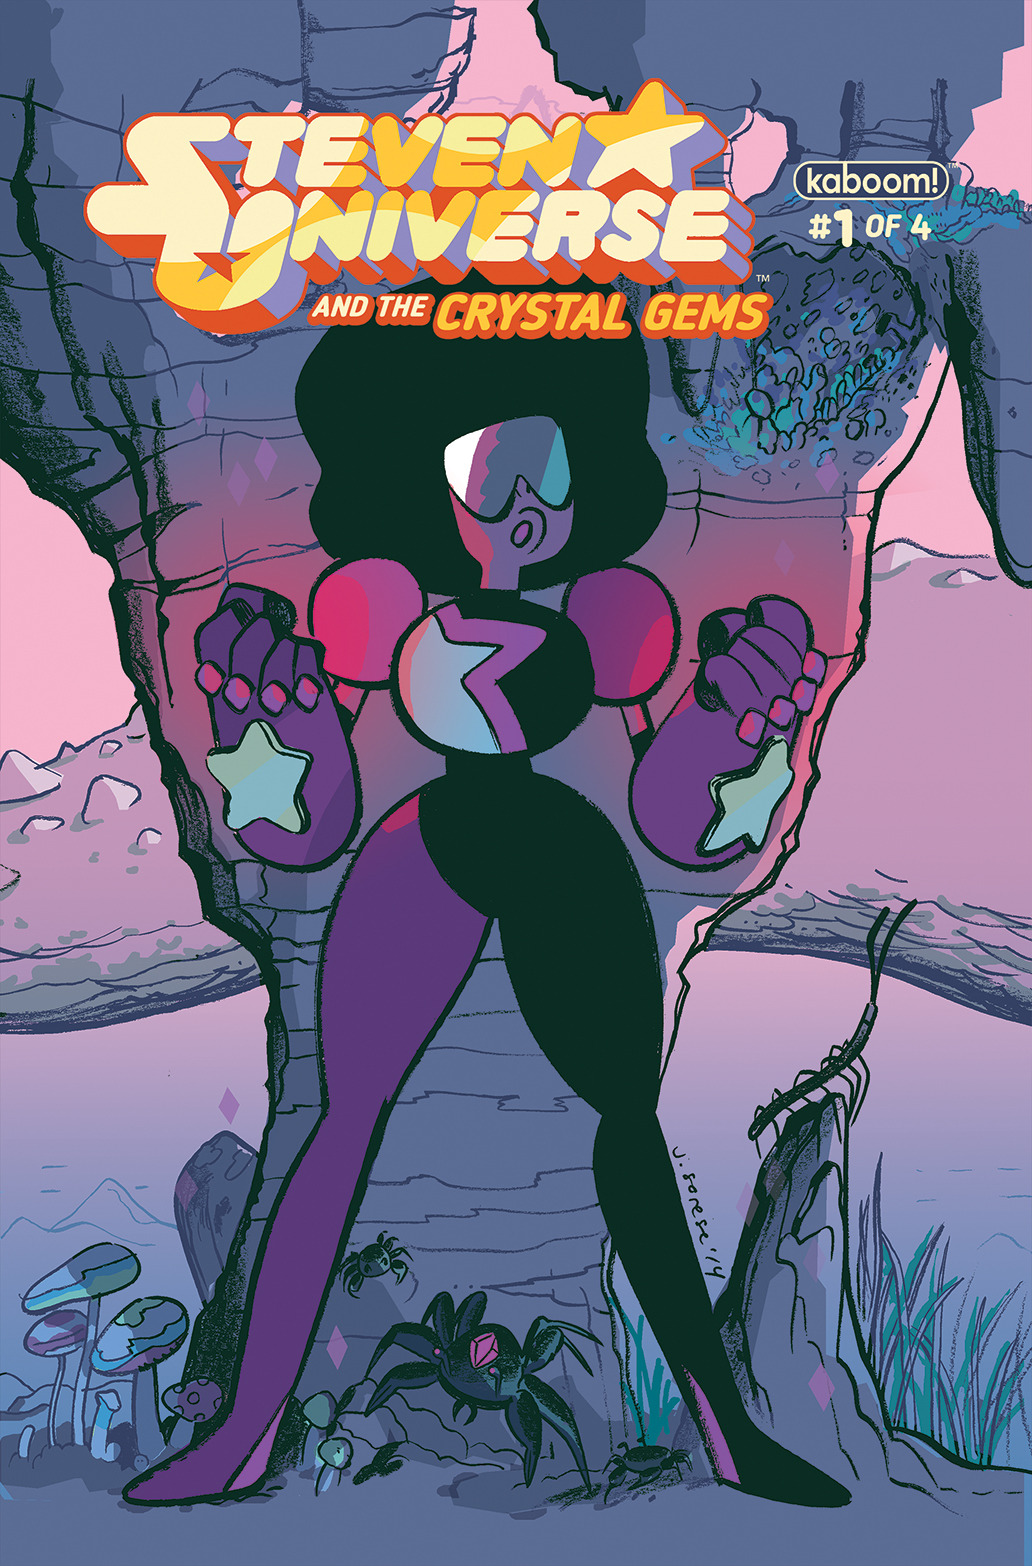 kaboomcomics:  NEW STEVEN UNIVERSE COMICS!!!!!!!! Ahem. Steven Universe and the Crystal